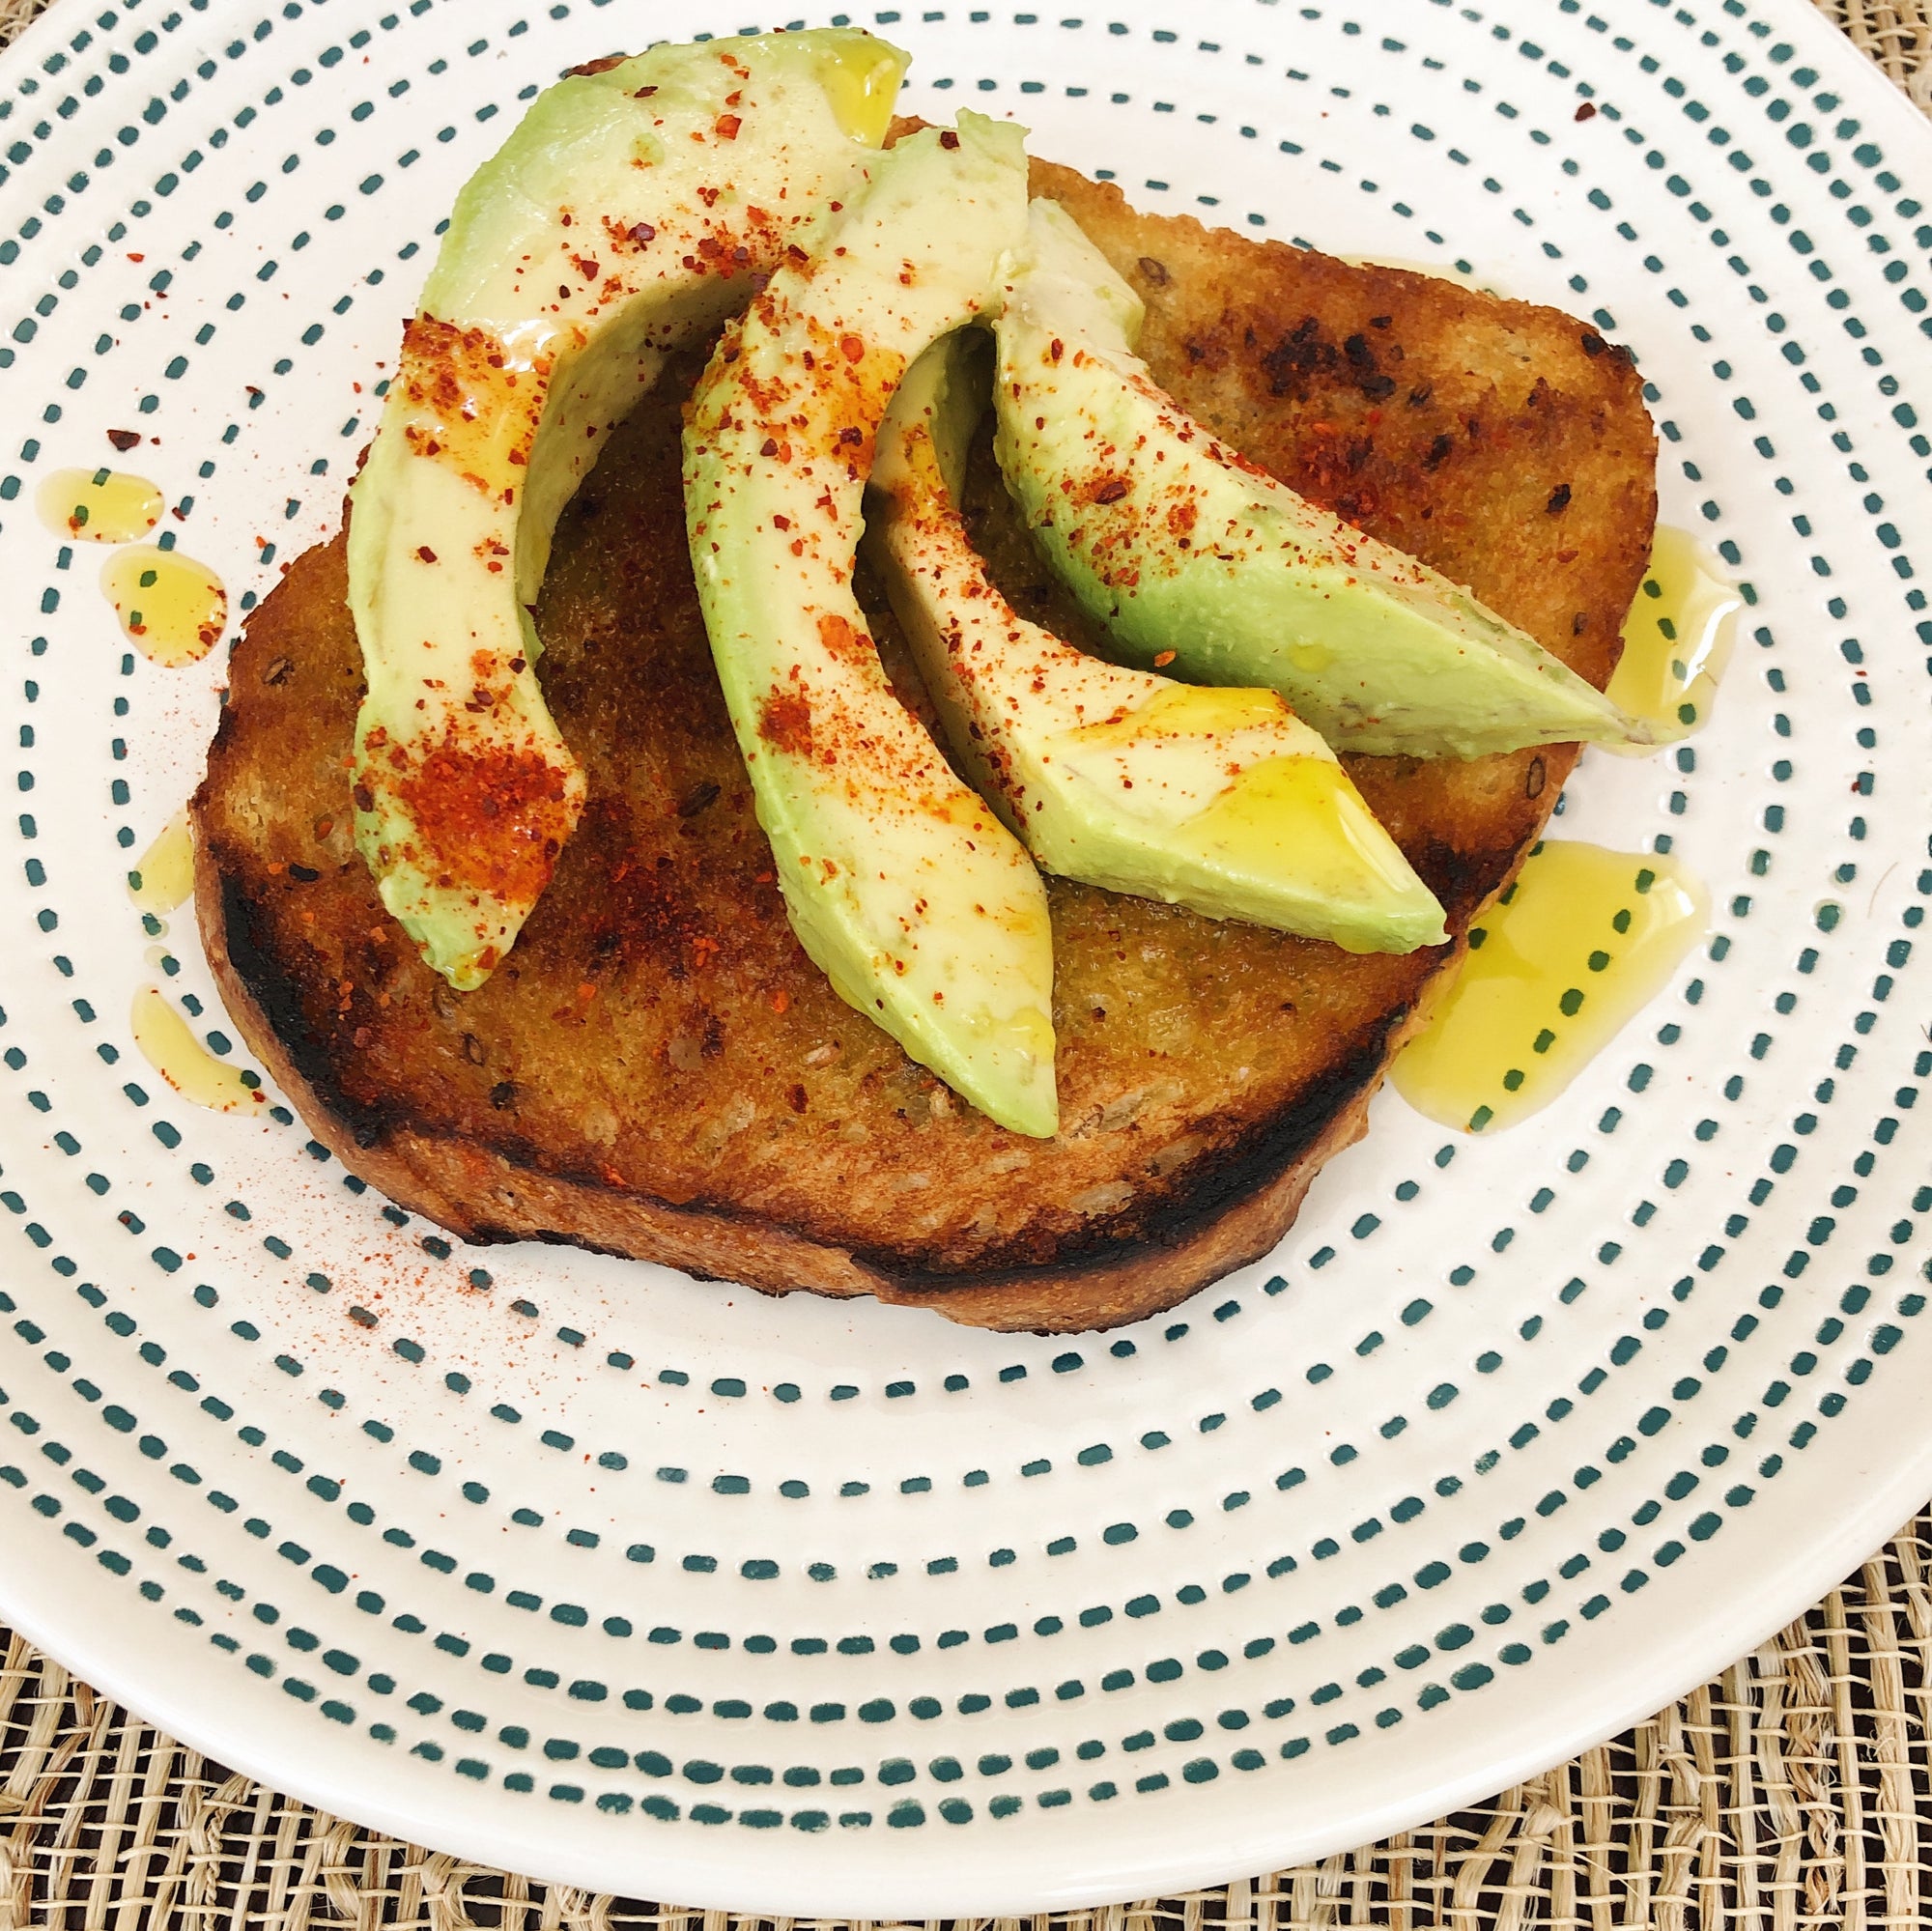 Avocado toast with piment d'espelette